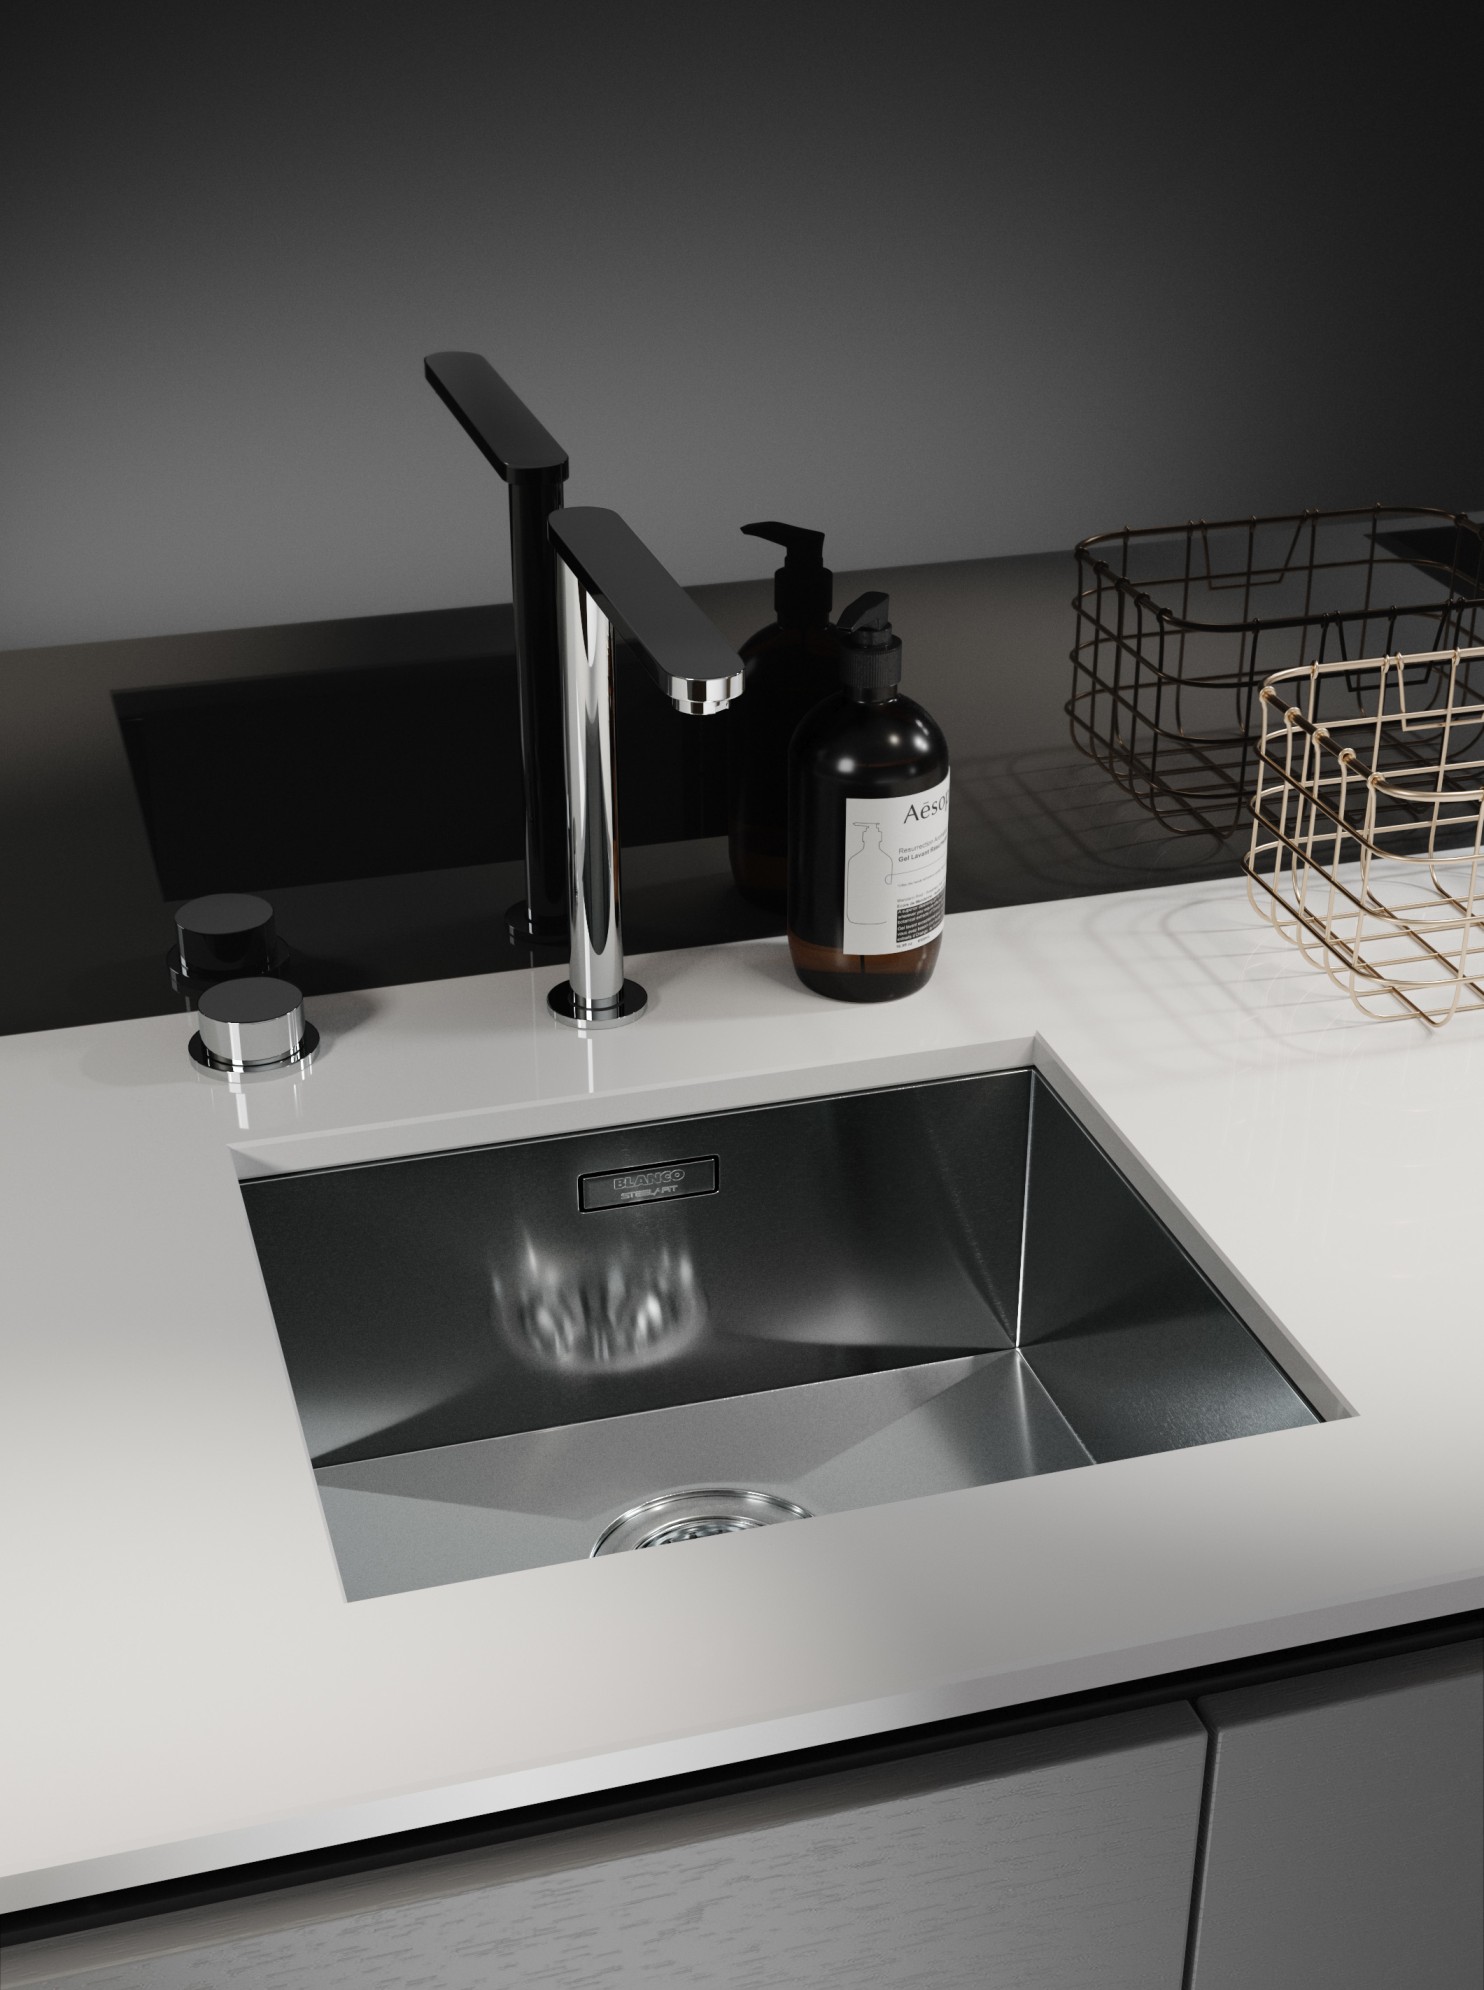 Modern kitchen sink surface with tap